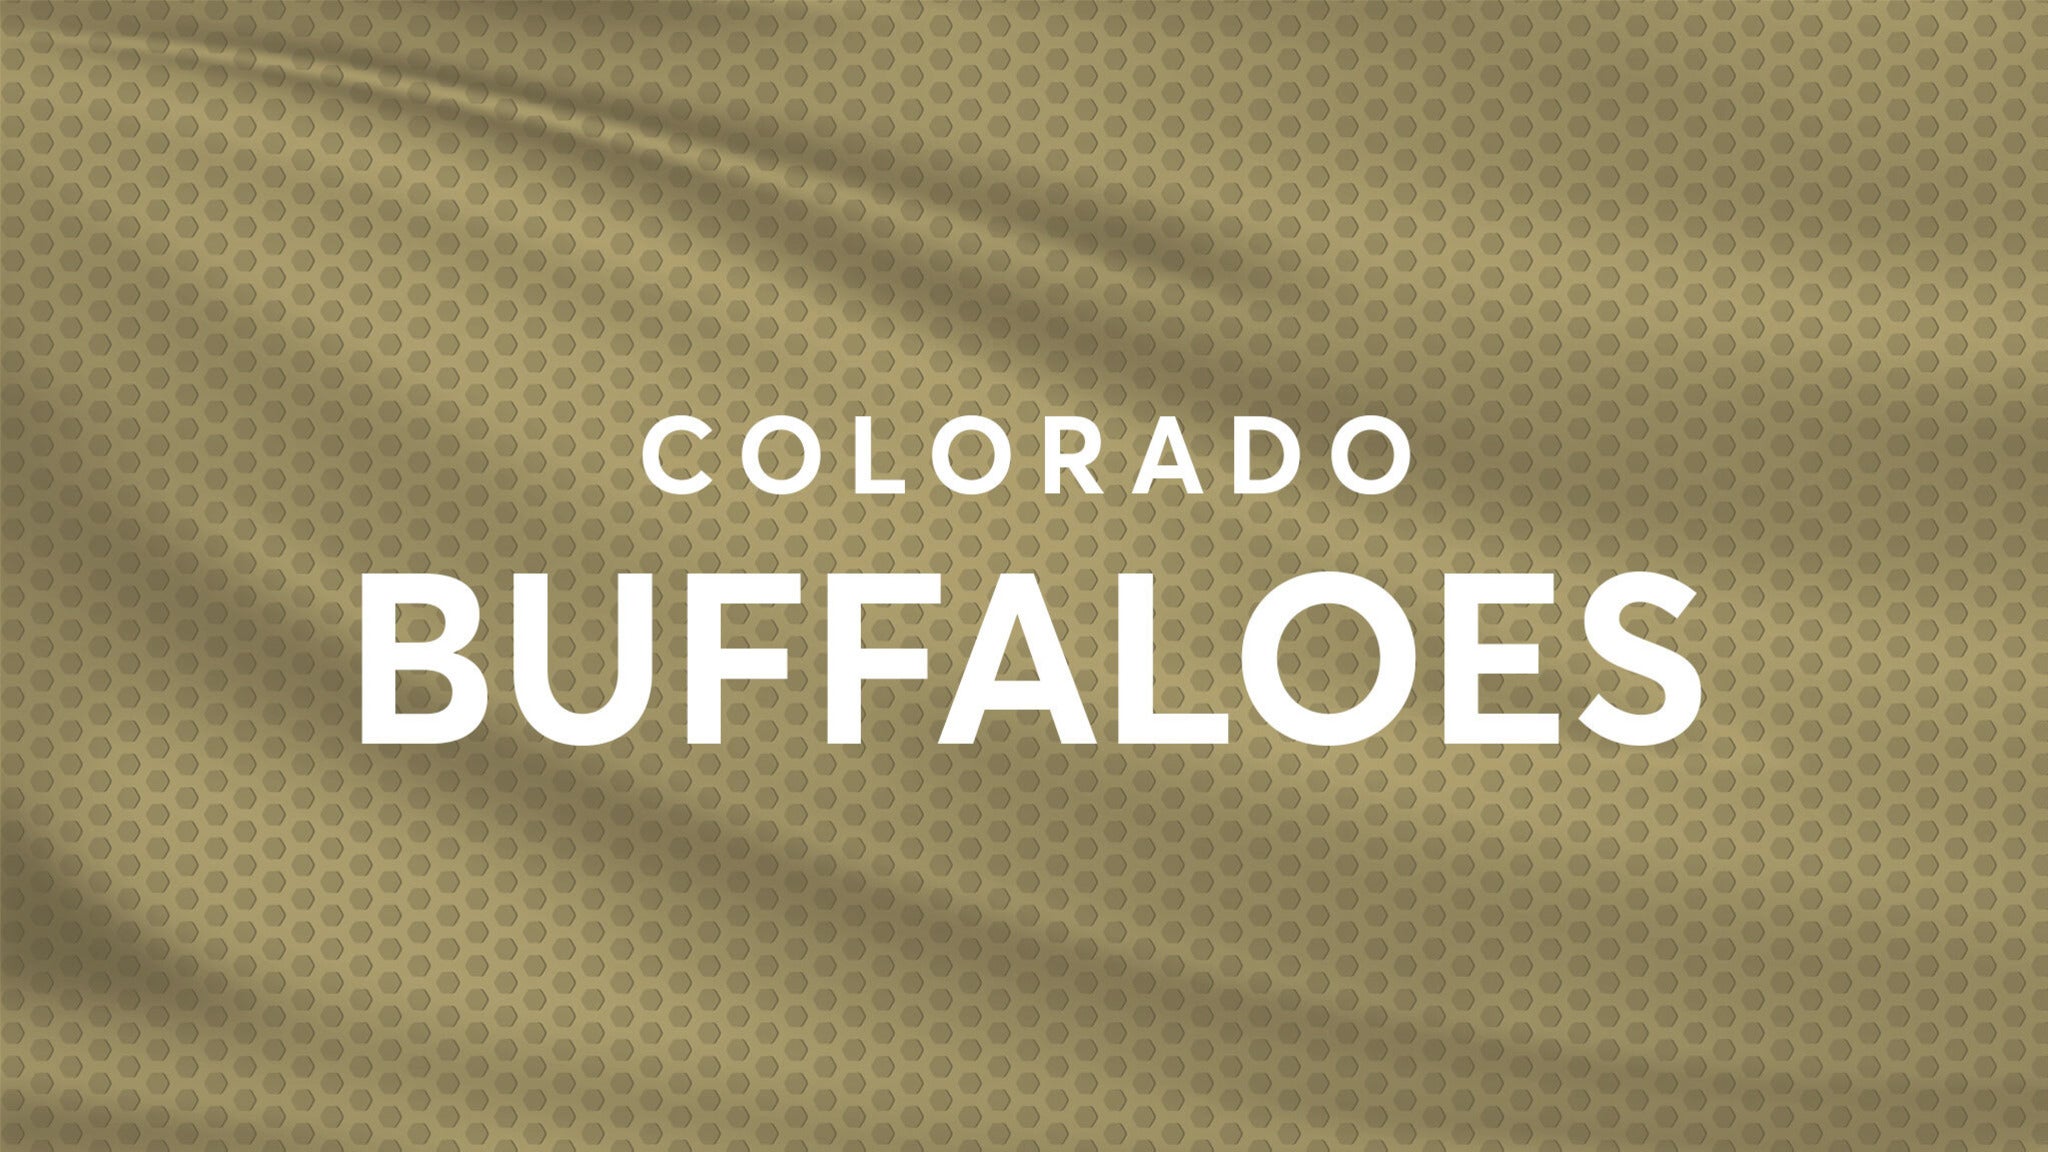 University of Colorado Buffaloes Volleyball presale information on freepresalepasswords.com